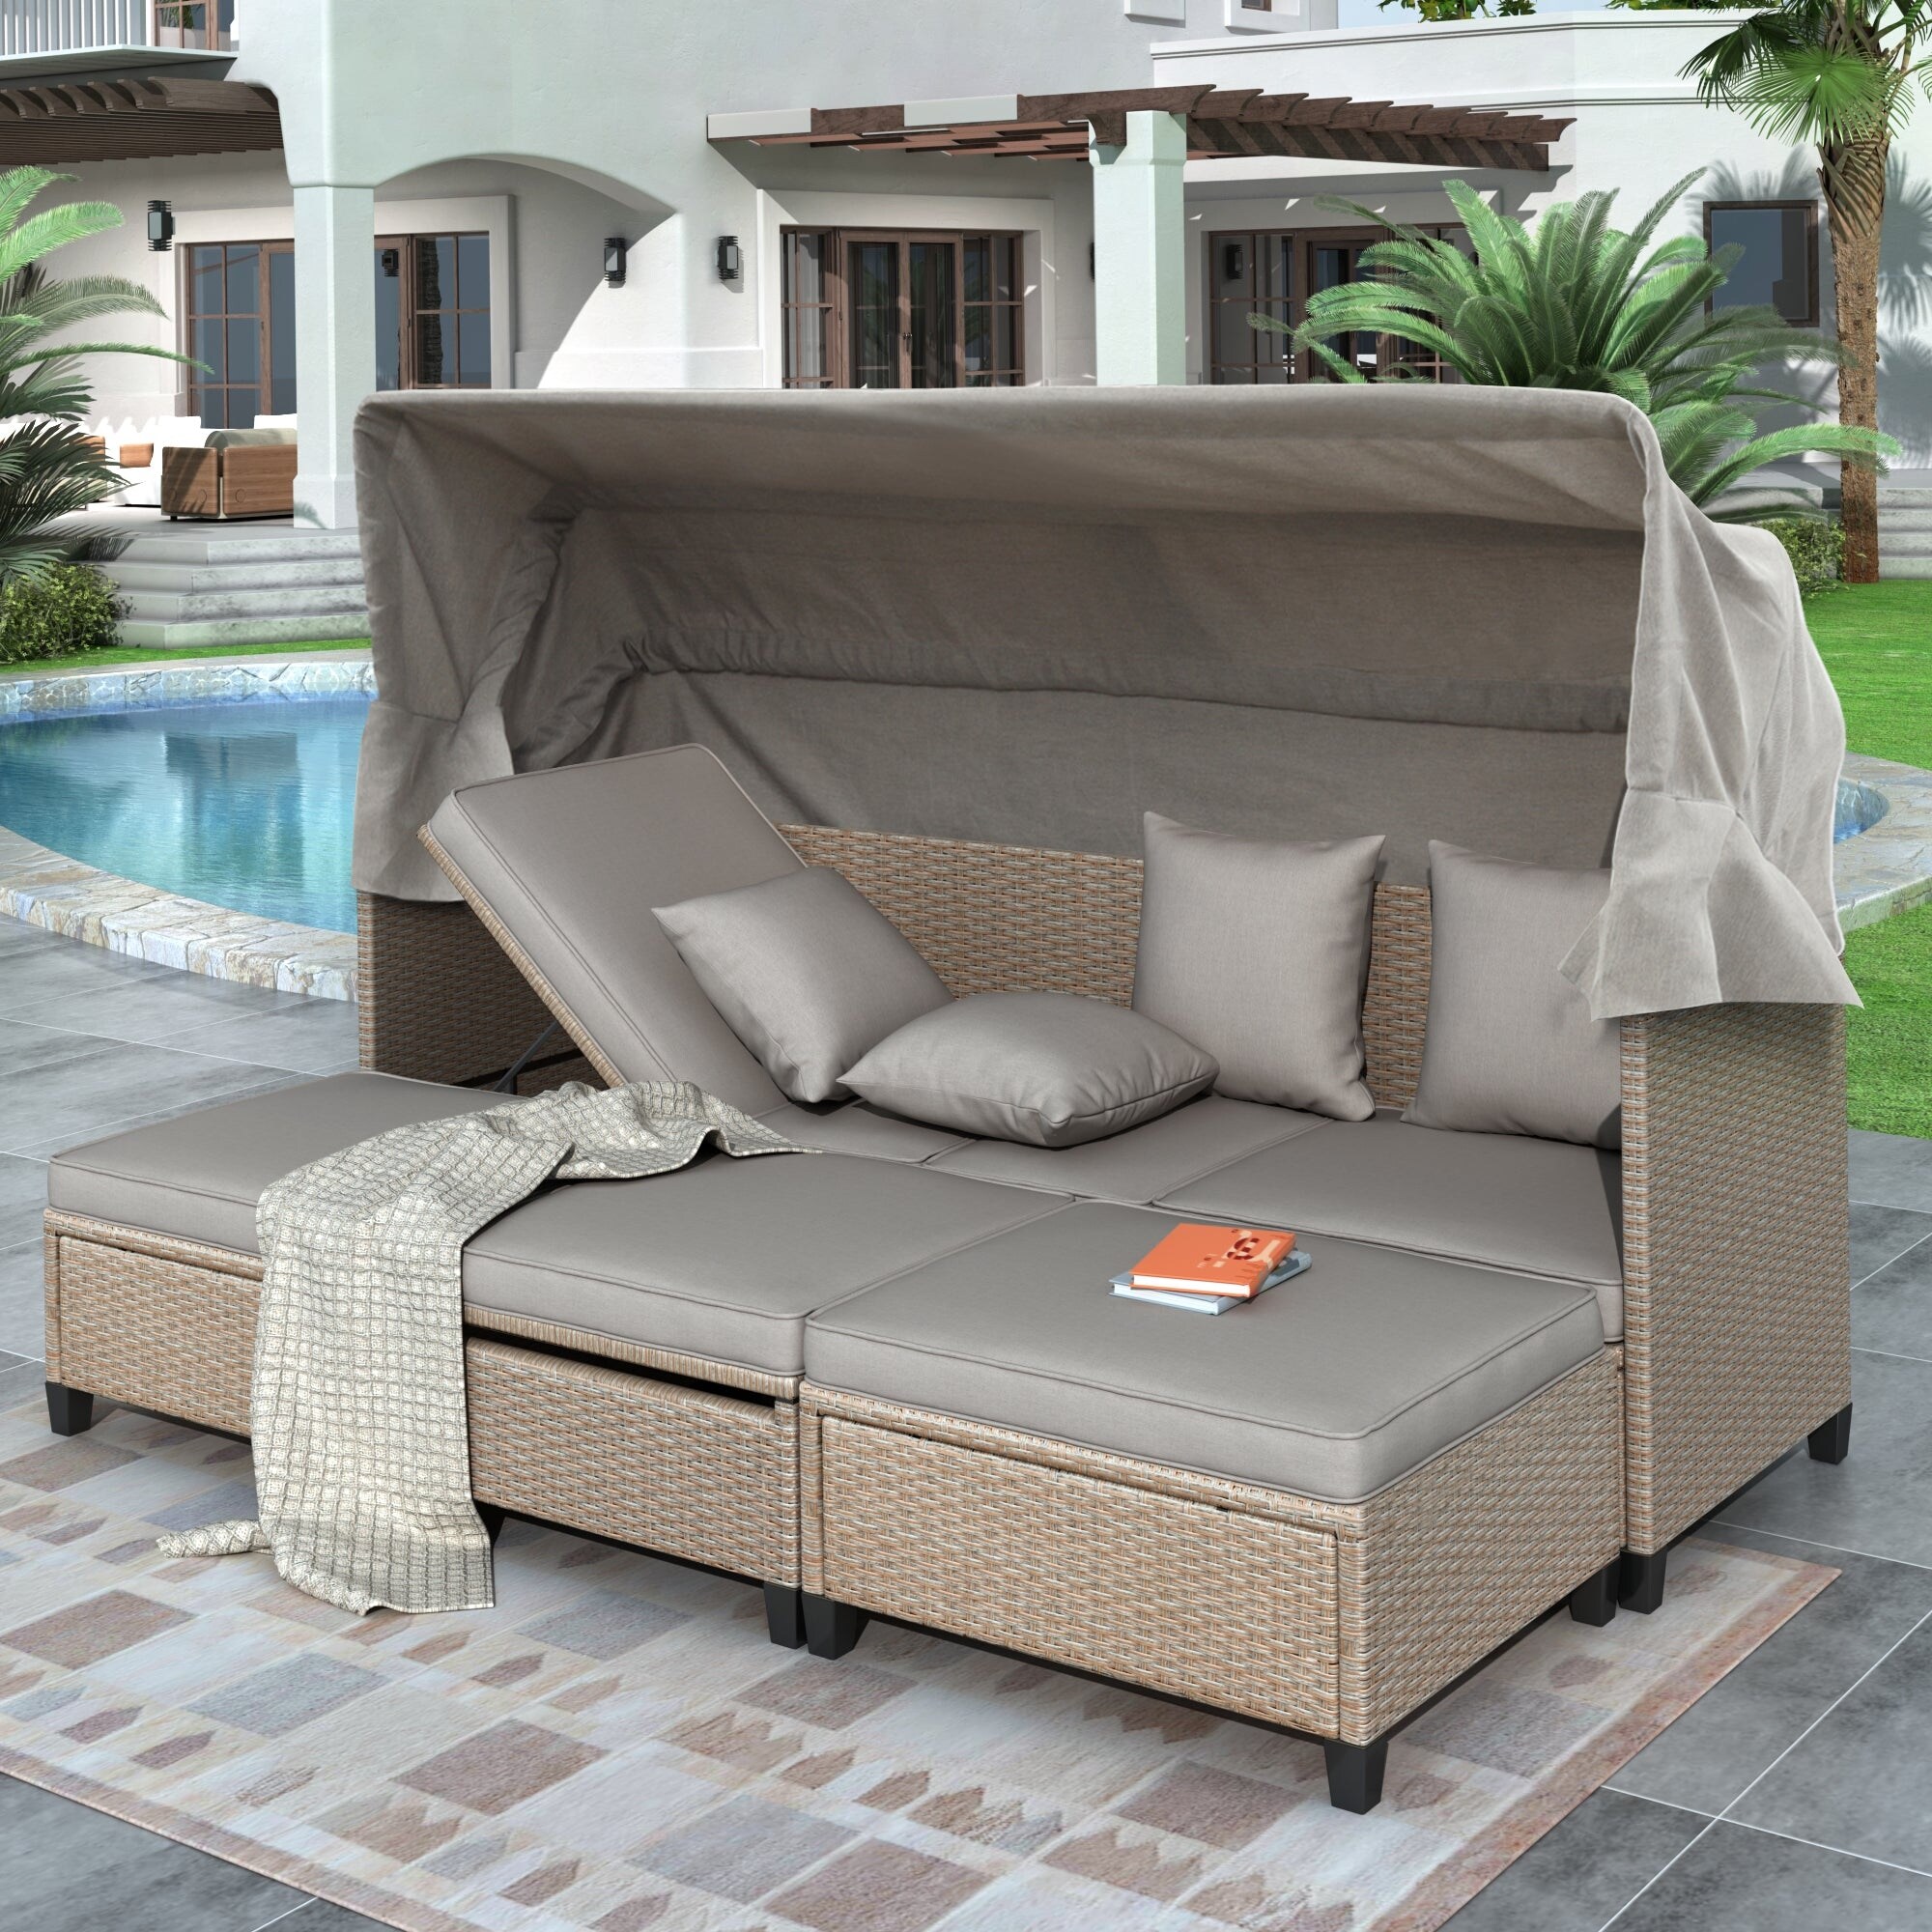 4 Pieces Outdoor Uv-resistant Rattan Patio Sofa Set With Retractable Canopy